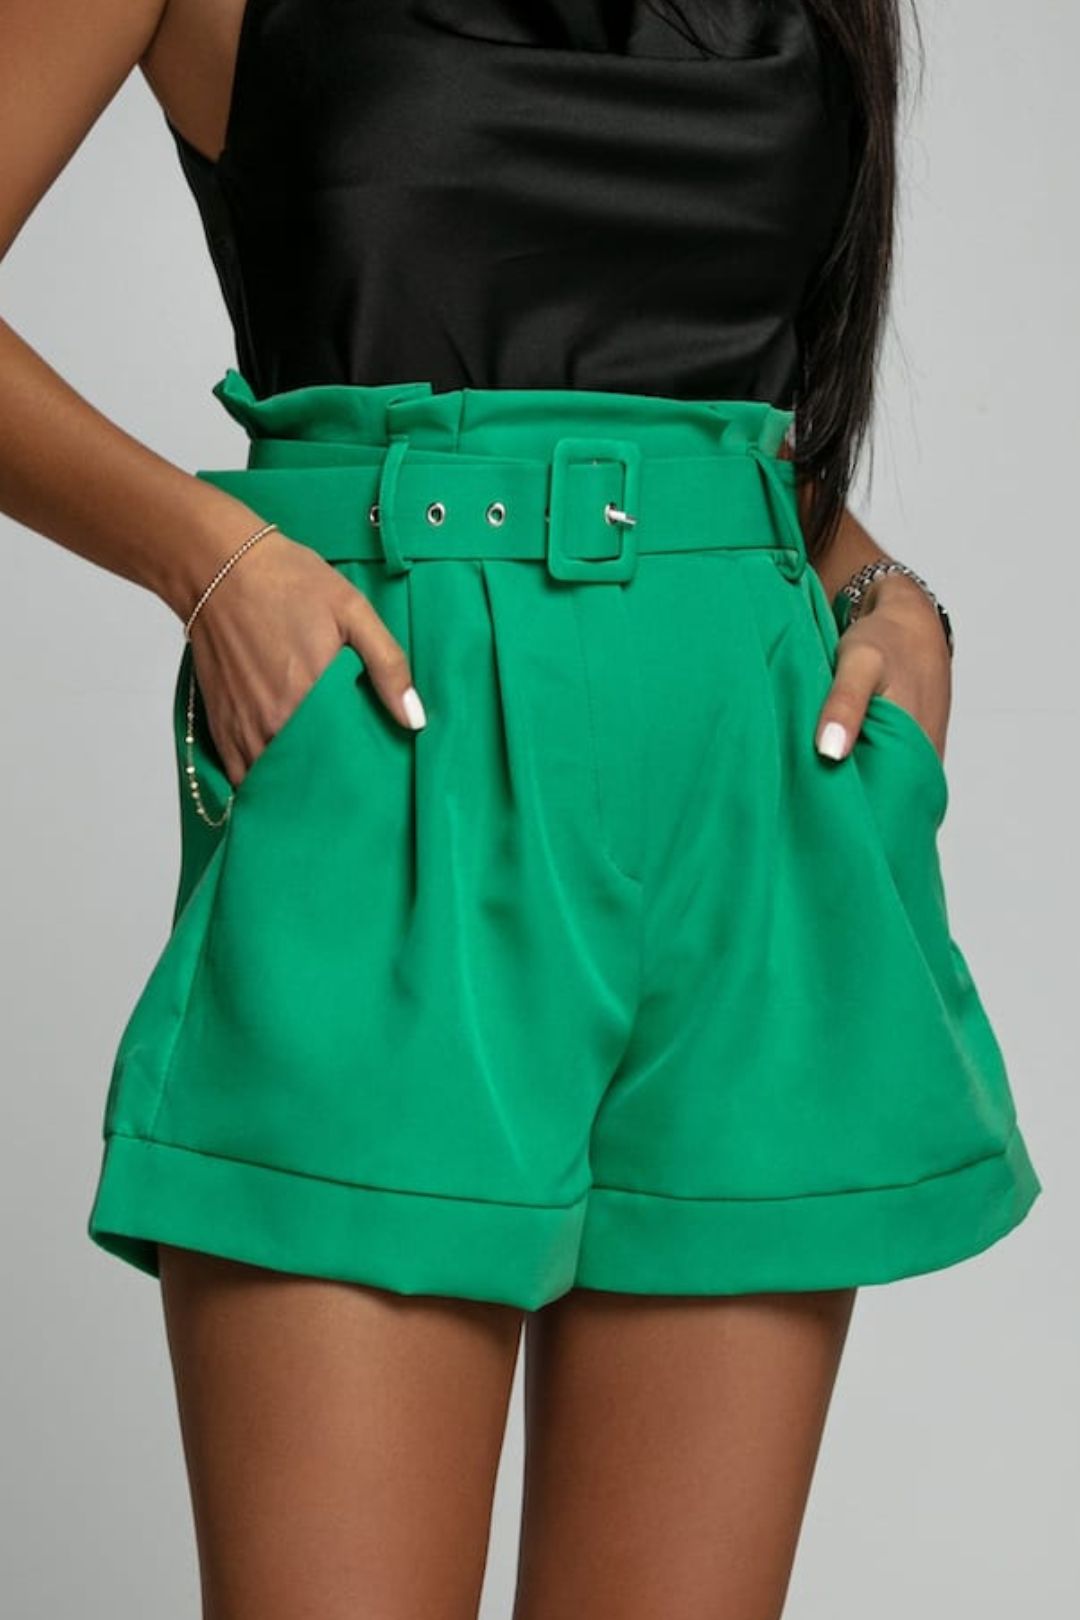 Women's shorts with high waist and green belt